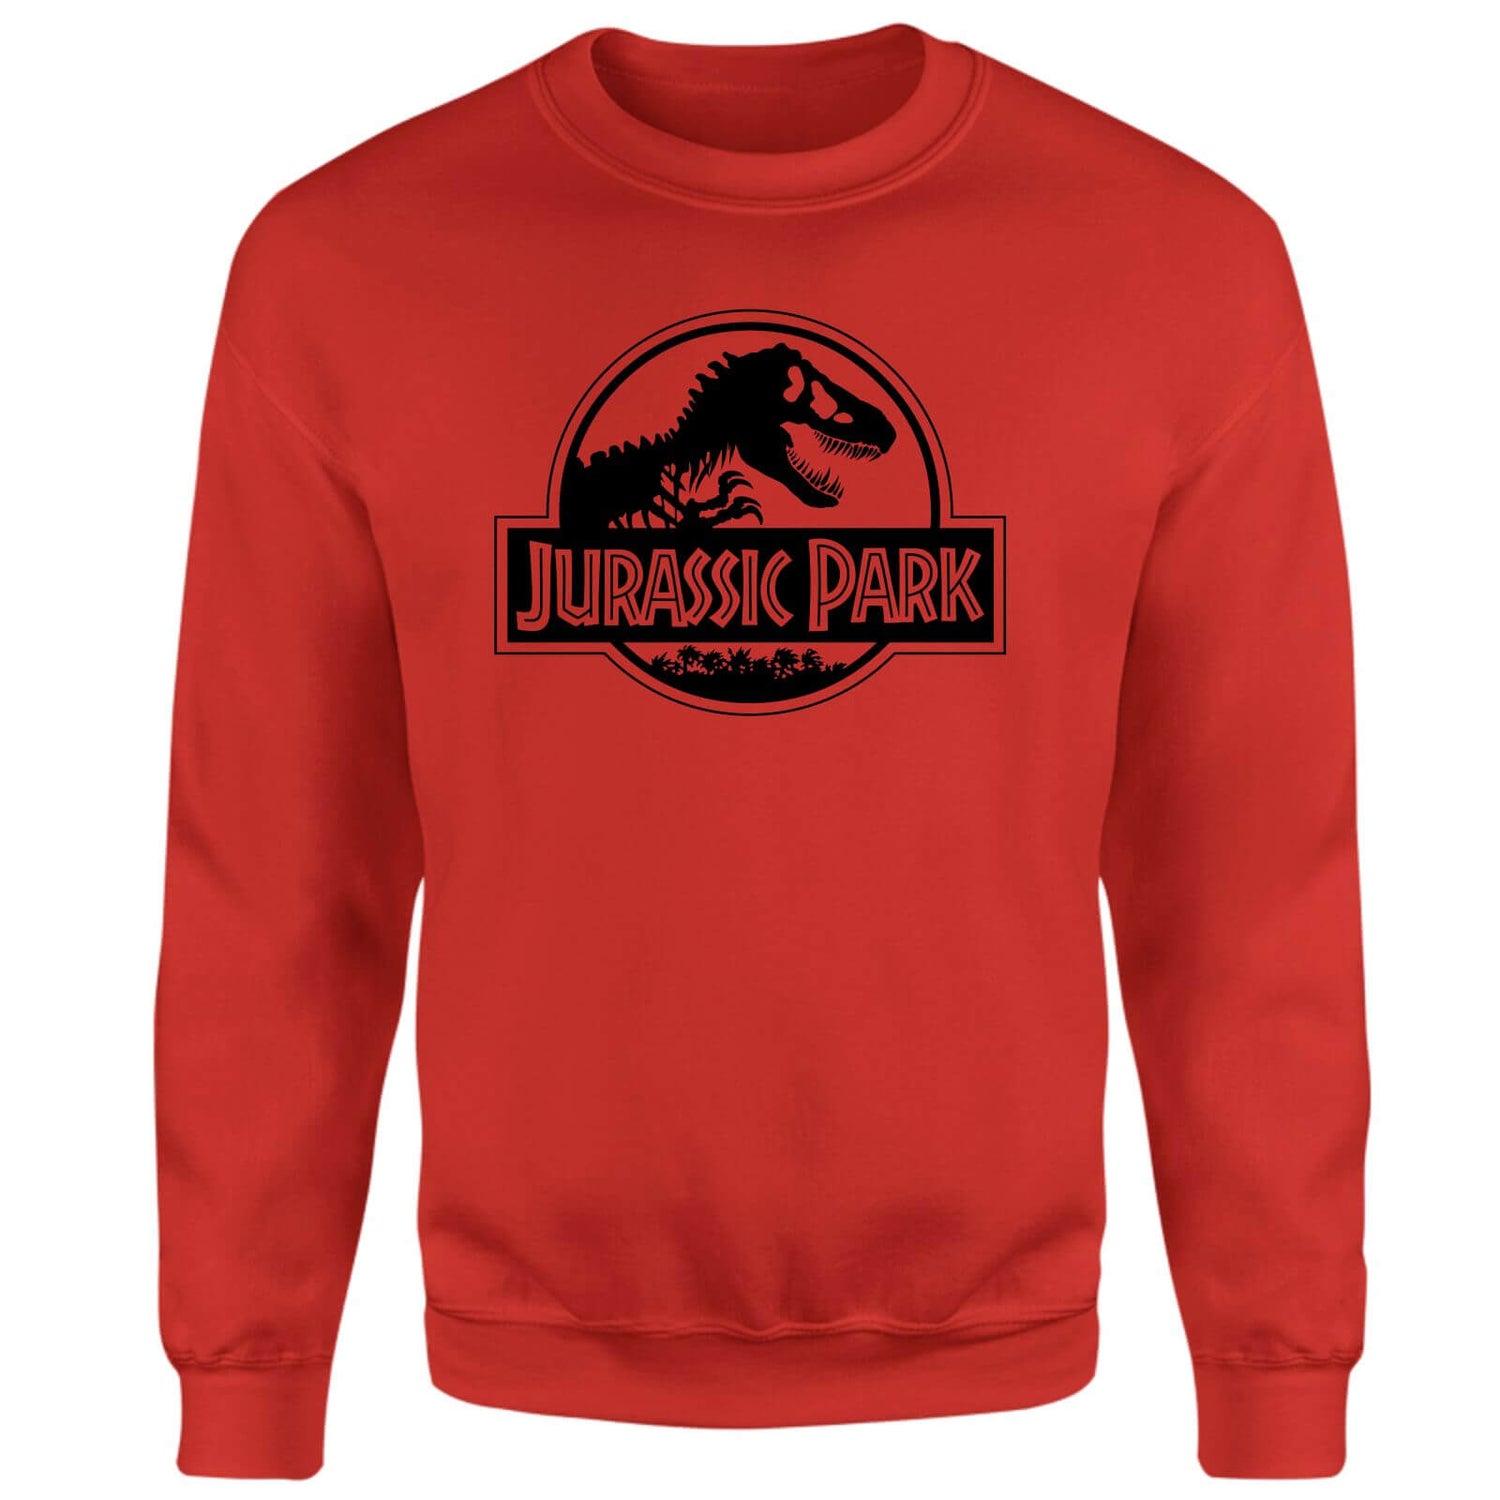 Jurassic Park Logo Sweatshirt - Red